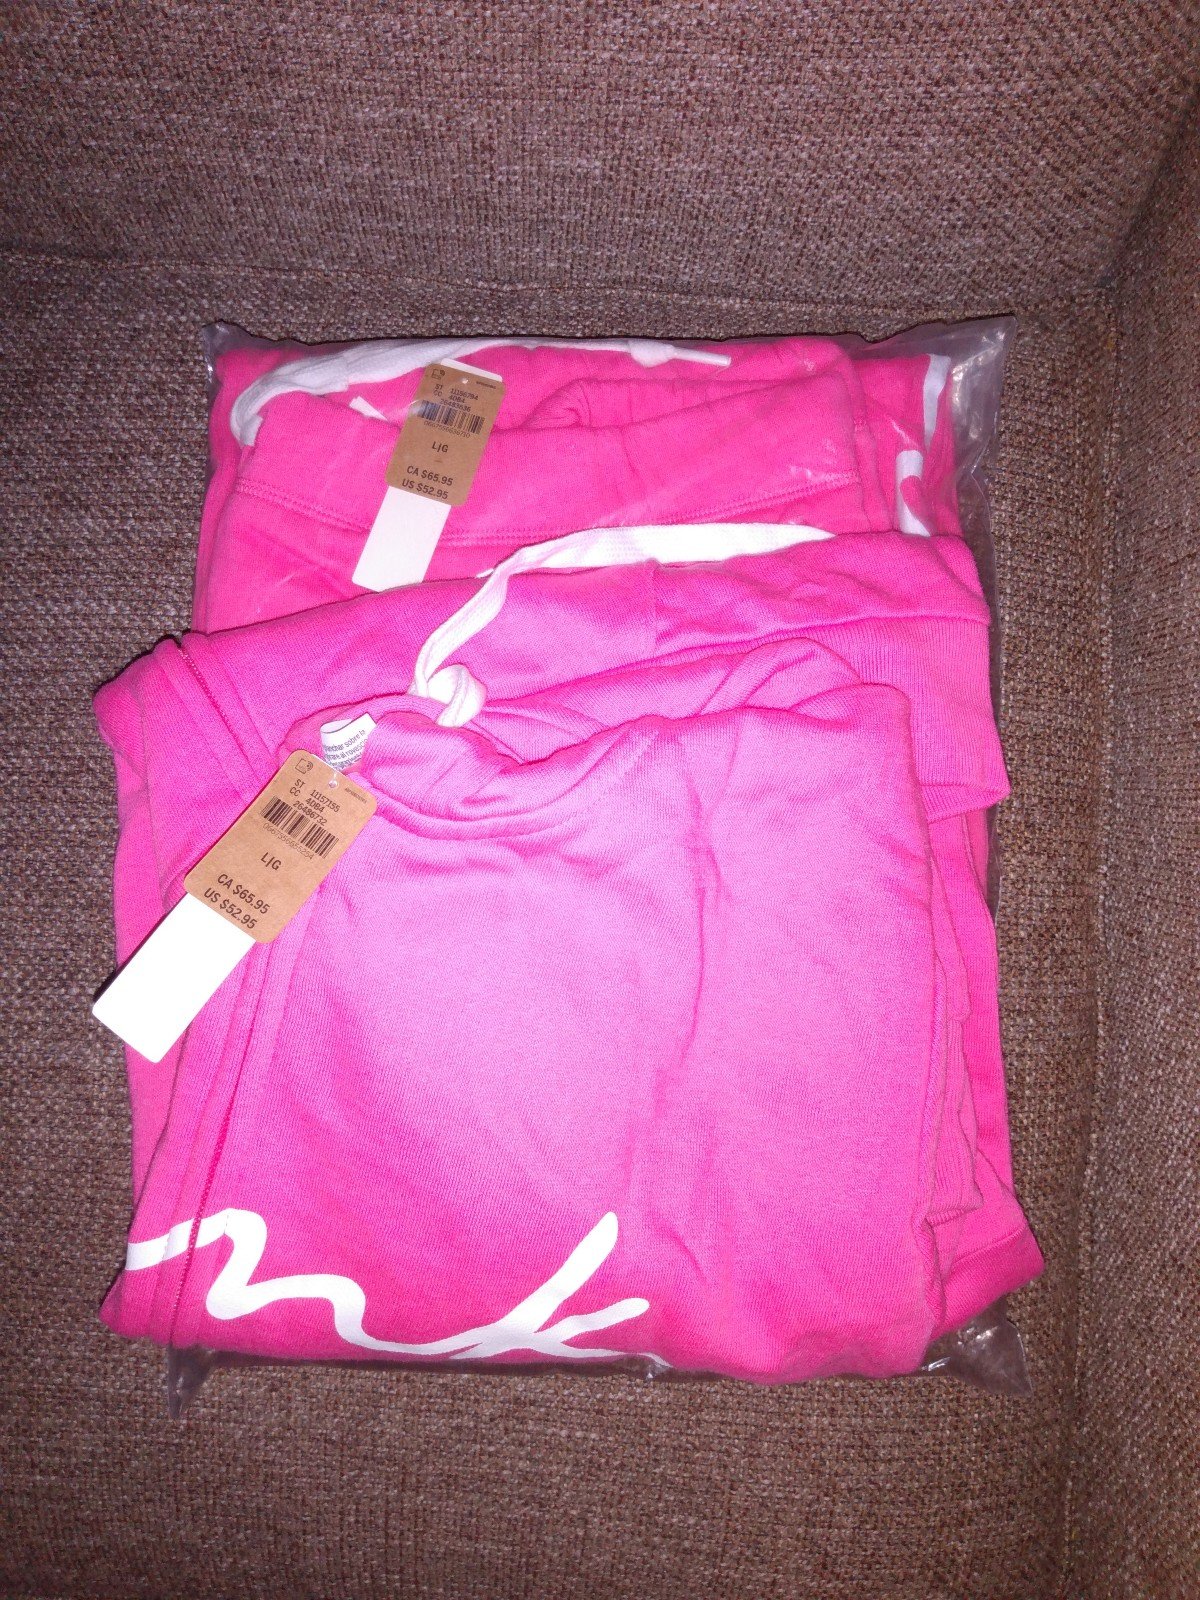 Buy Victoria´s Secret Pink outfit kxJQ6cMVv Store Online